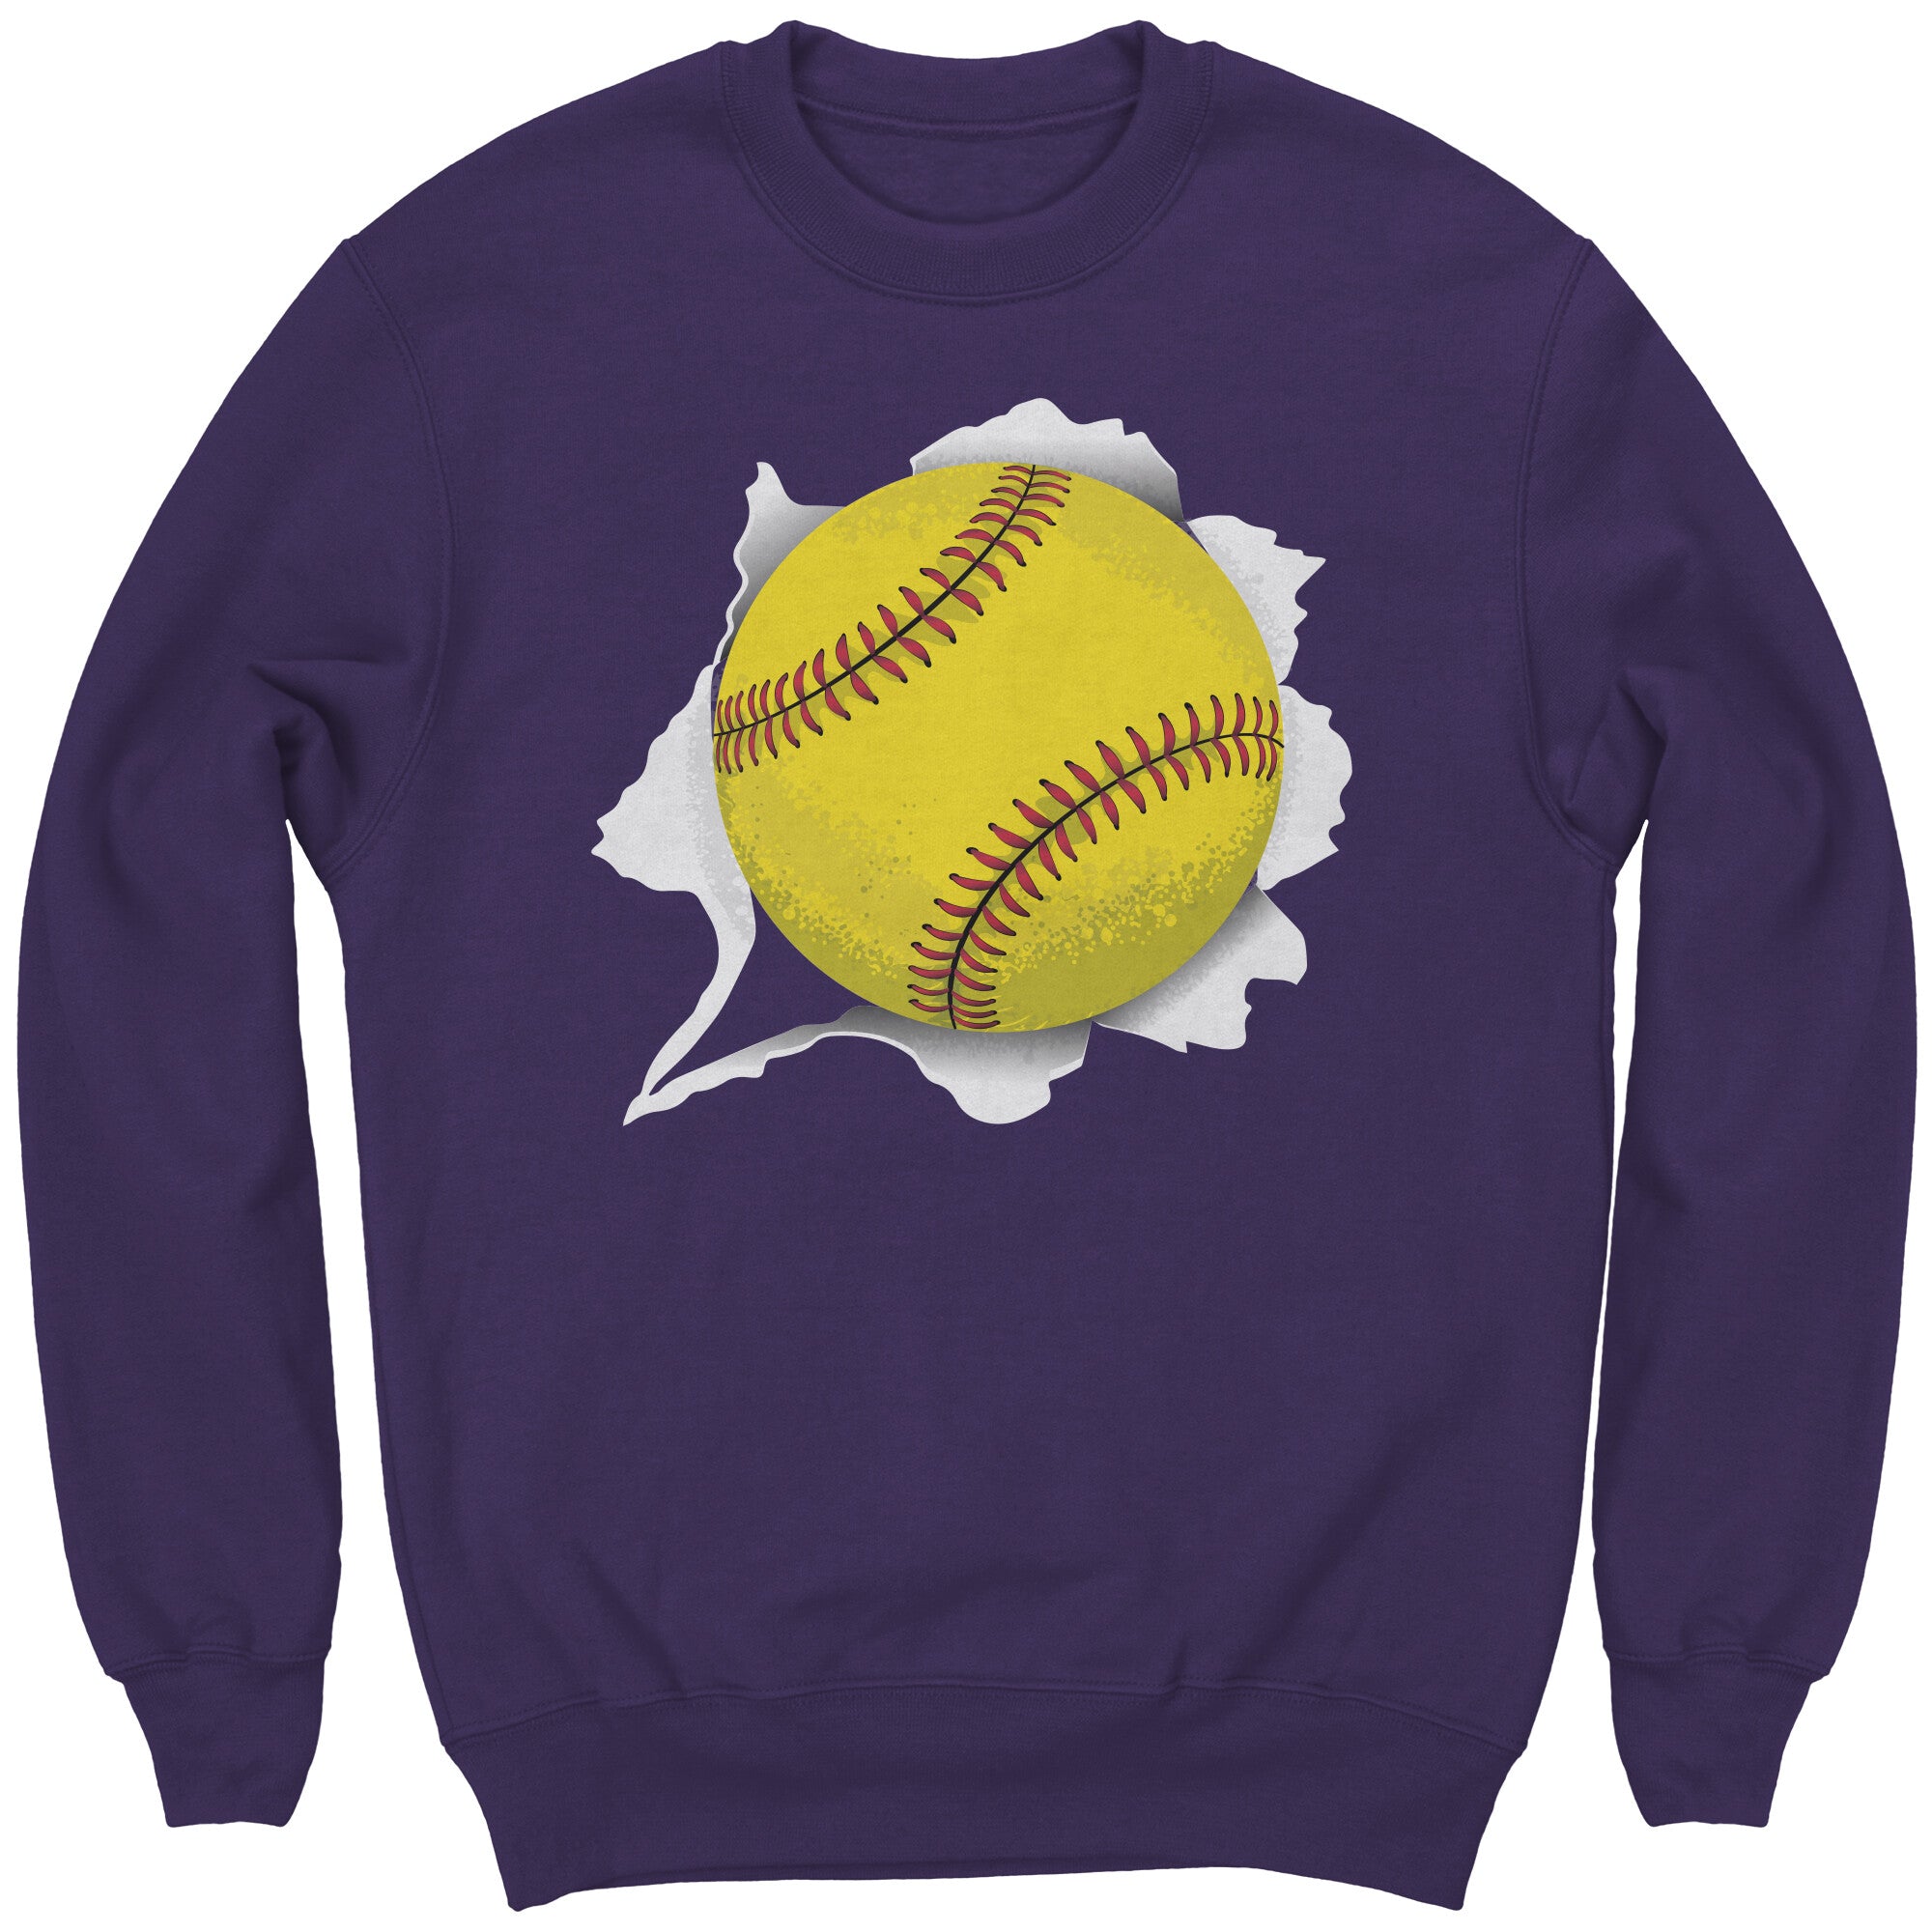 Softball Youth Sweatshirt